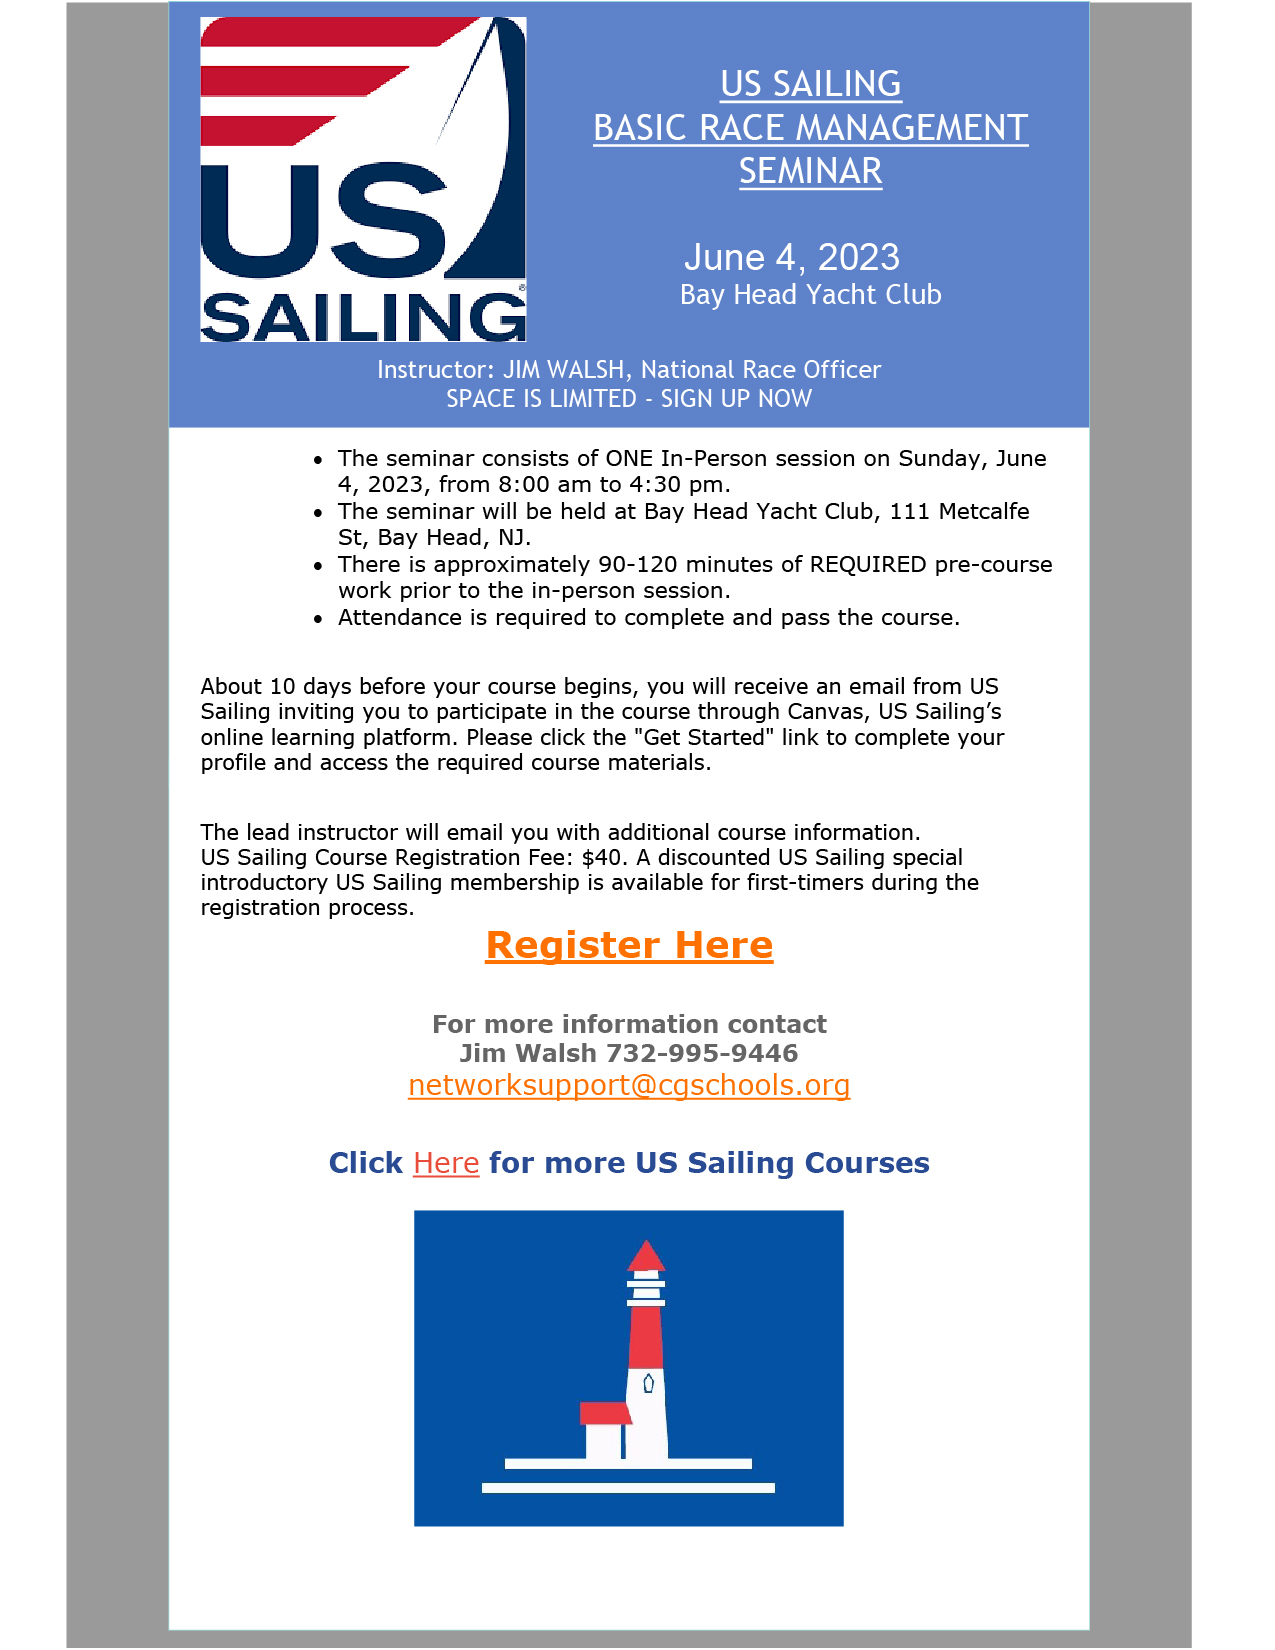 US Sailing Basic Race Management Seminar announcement